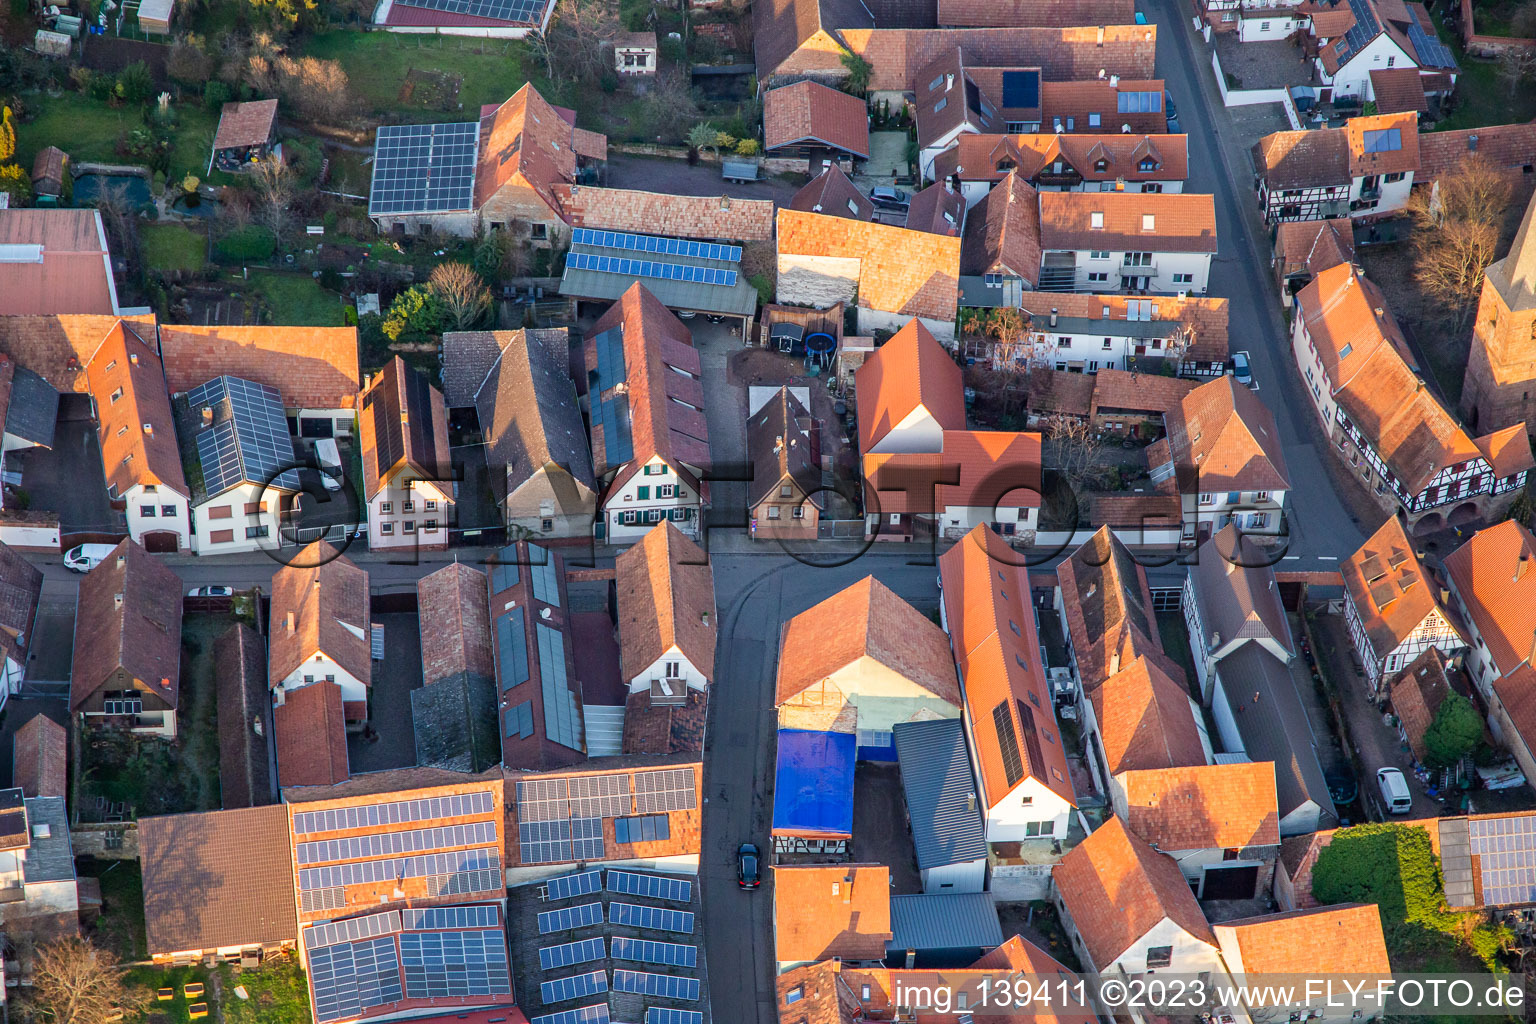 Aerial view of Main street from the south in the district Heuchelheim in Heuchelheim-Klingen in the state Rhineland-Palatinate, Germany